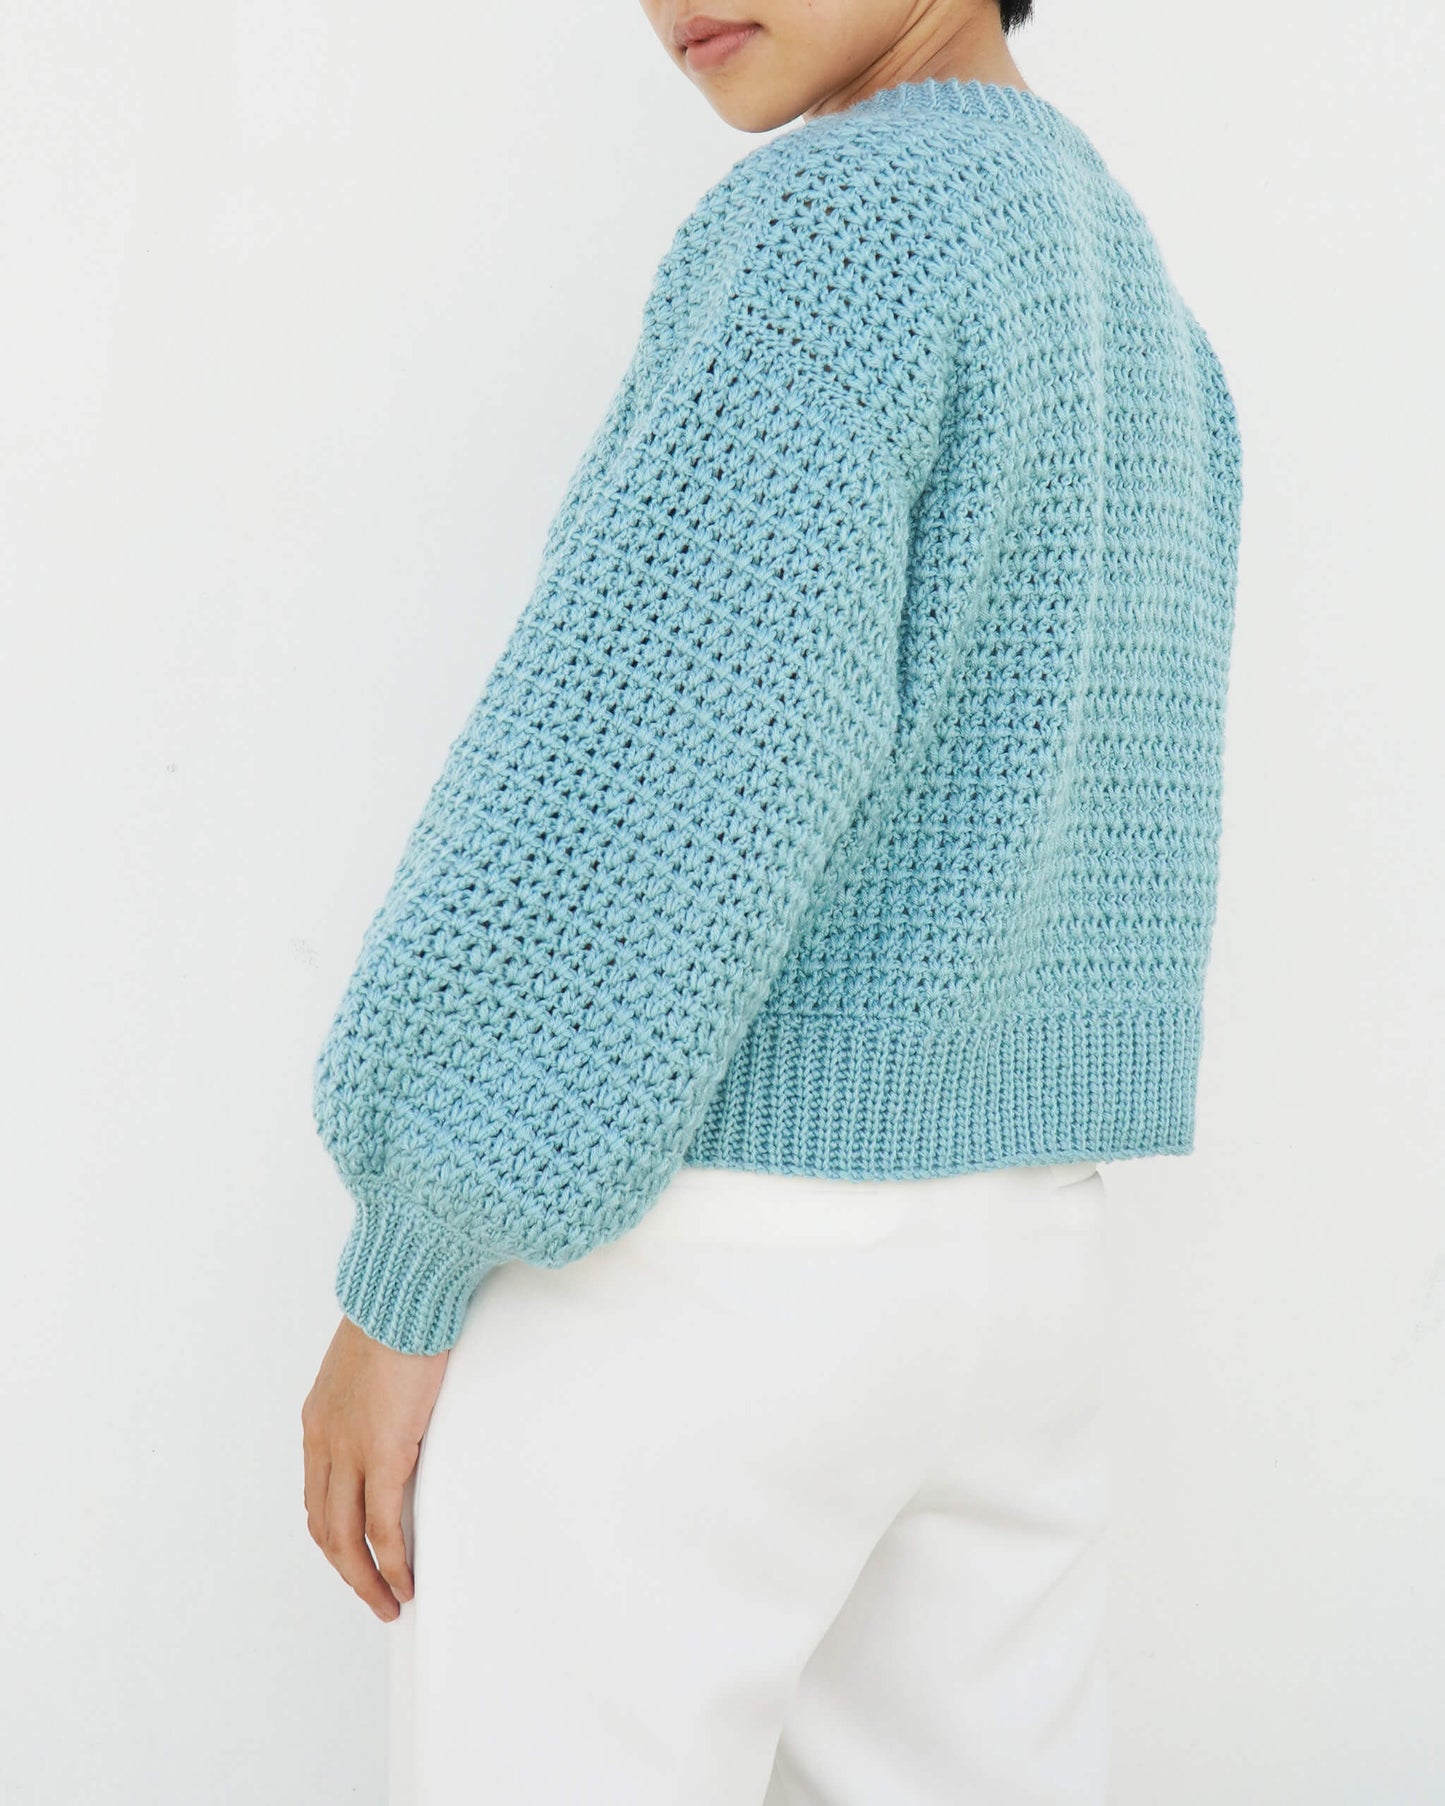 Cardigan No.26 | Crochet V-neck cardigan pattern